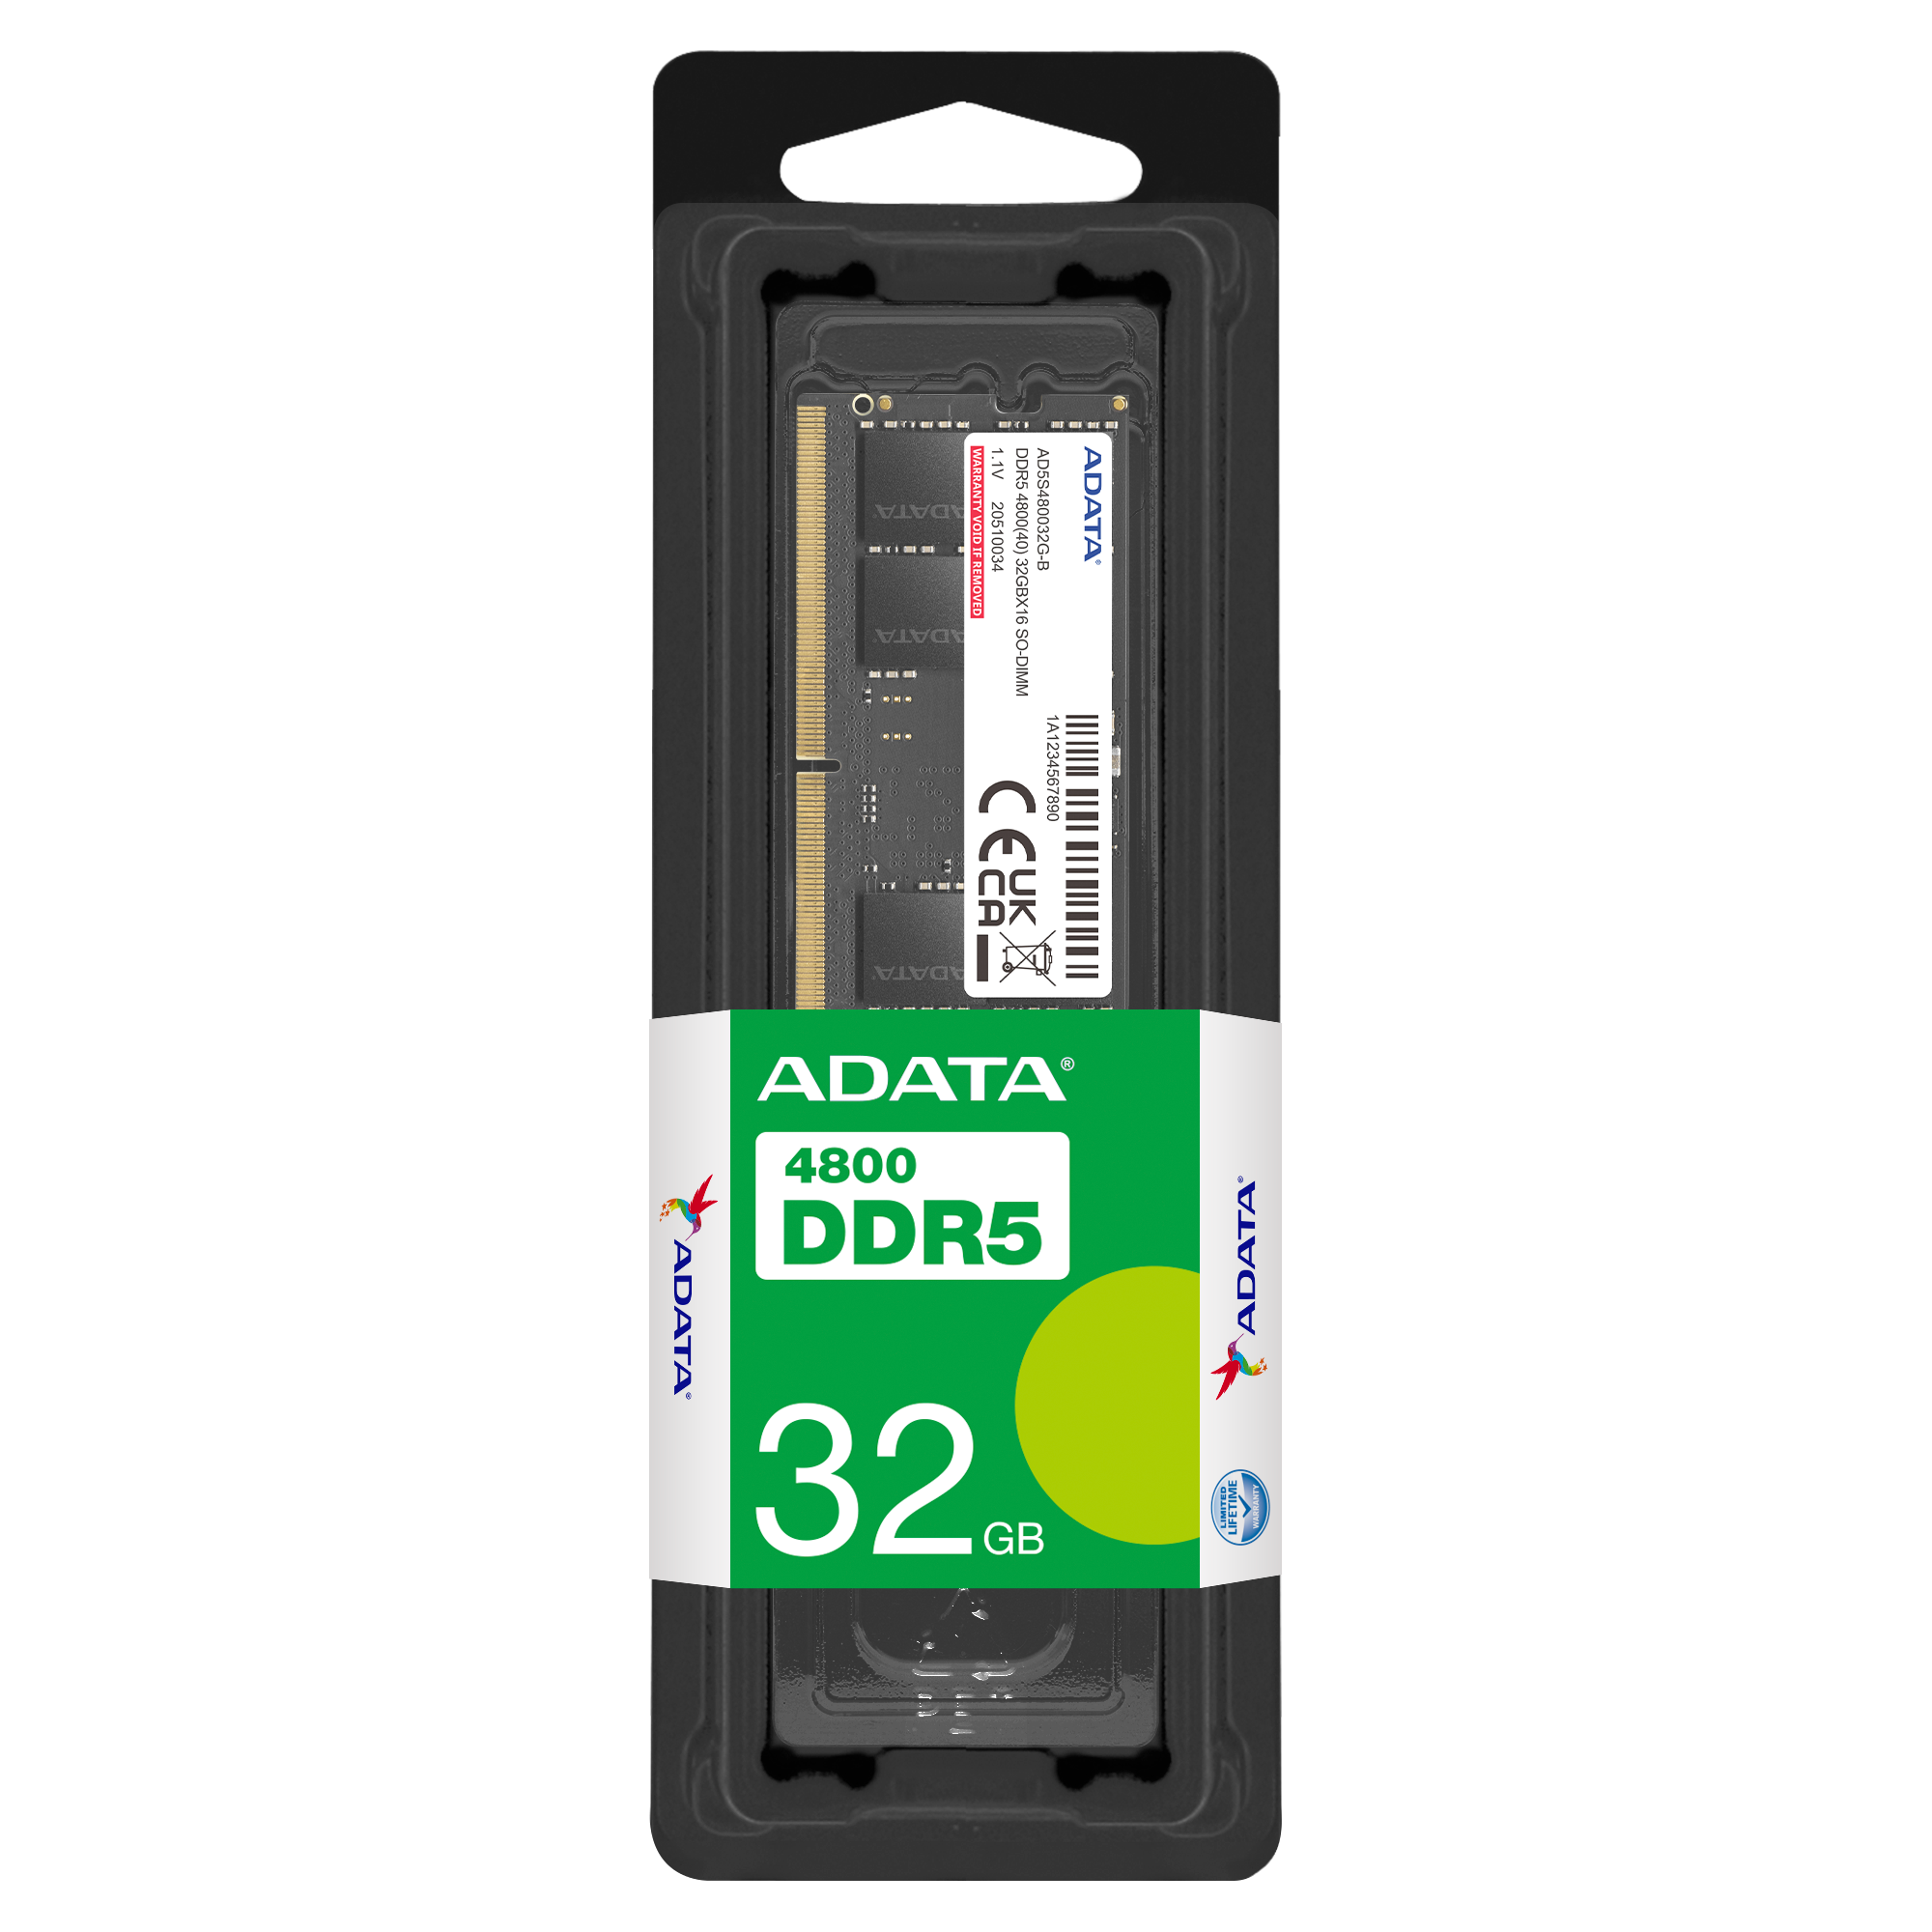 DDR5-4800 SO-DIMM Memory Module | ADATA (United States)